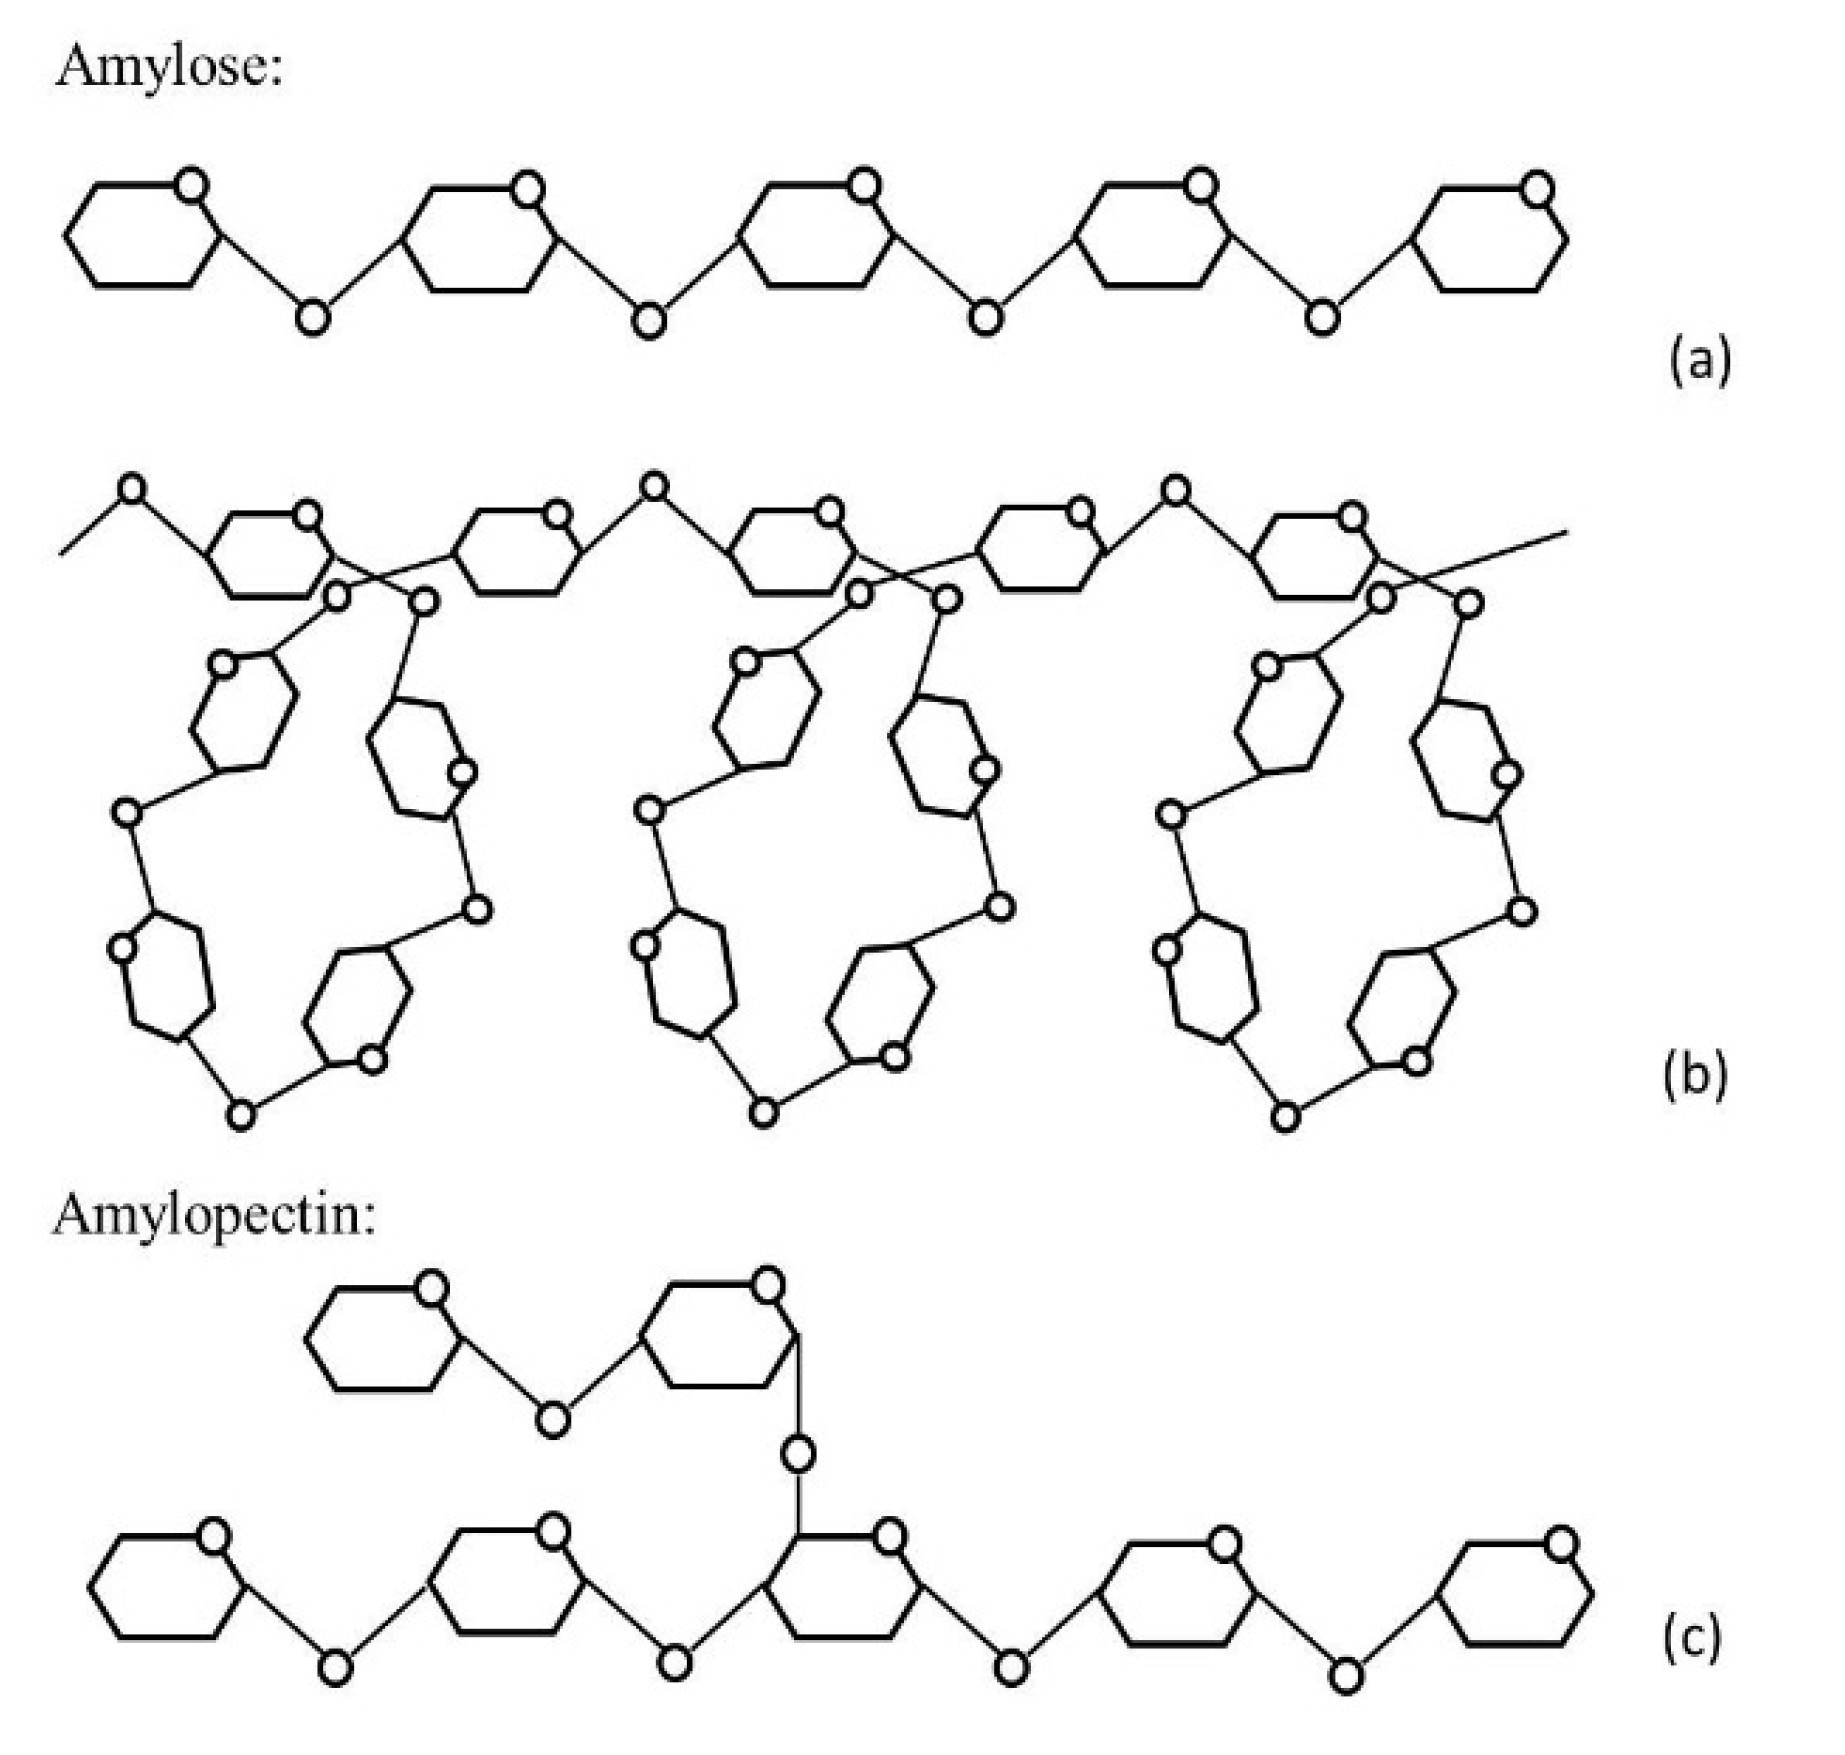 Amylose and amylopectin structure